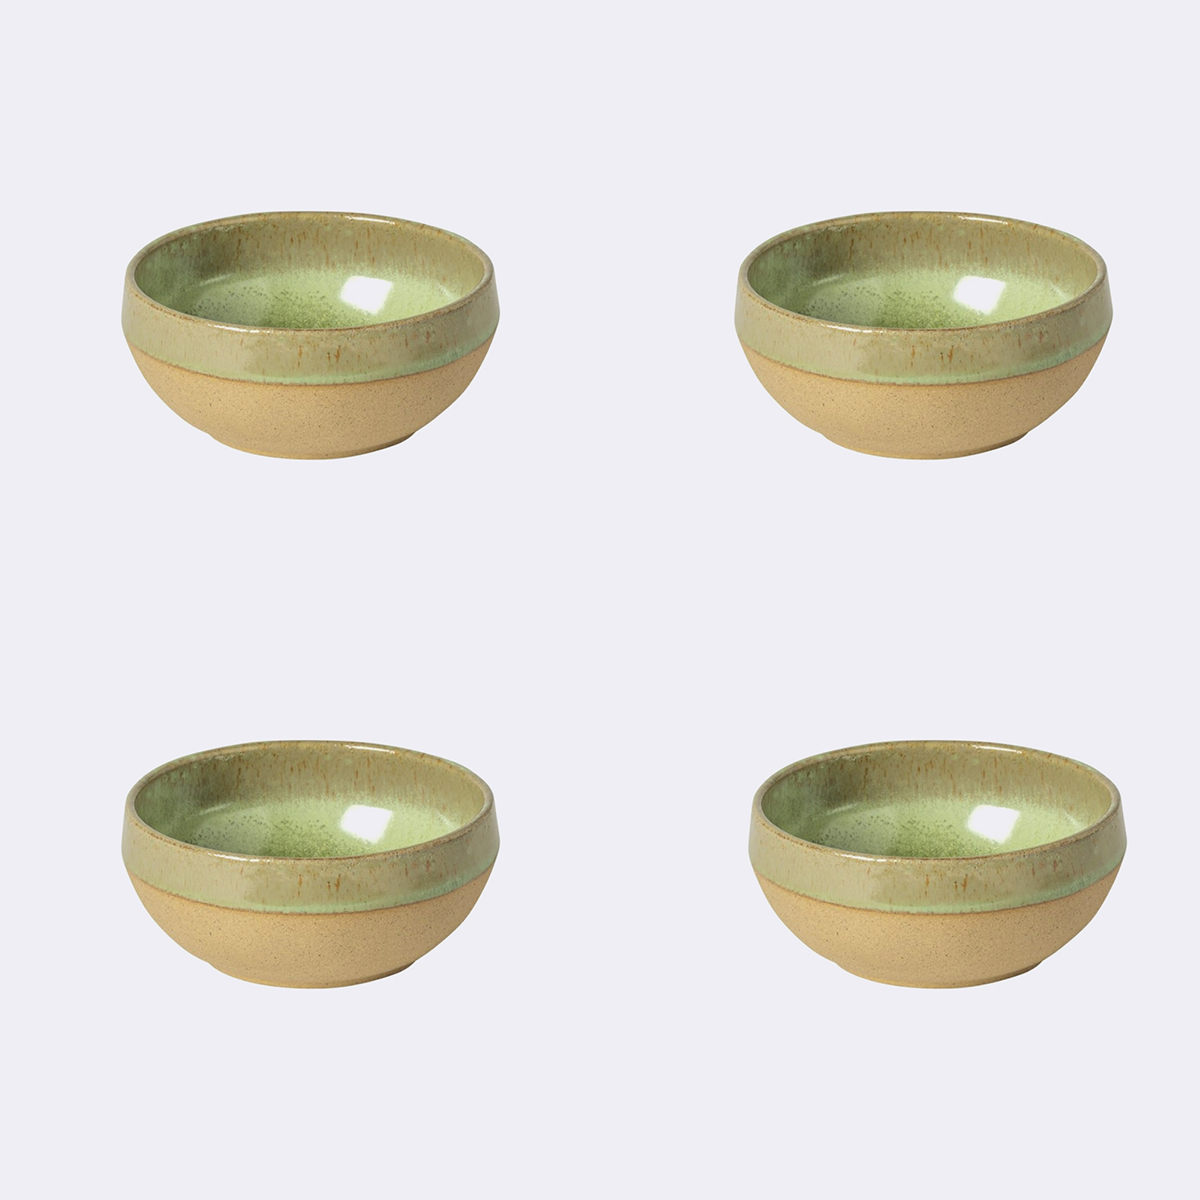 COSTA NOVA Marrakesh Ecogres Green Ceramic Fruit Bowl by Christian Tortu - Set of 4